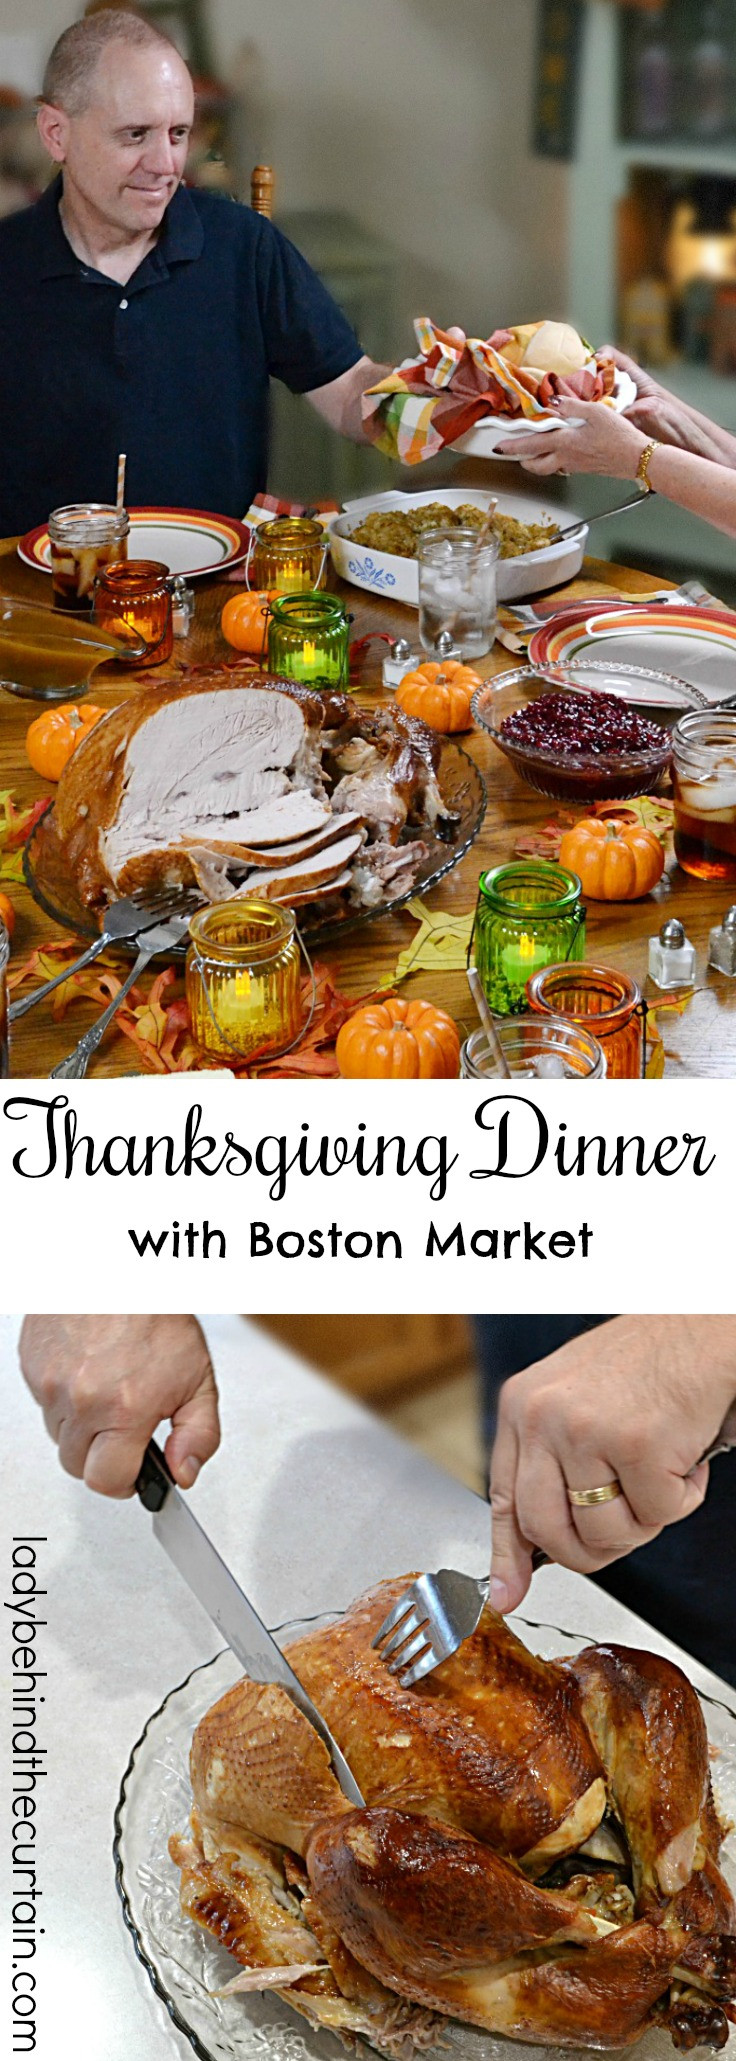 Boston Market Thanksgiving Turkey Dinner
 Thanksgiving Dinner with Boston Market